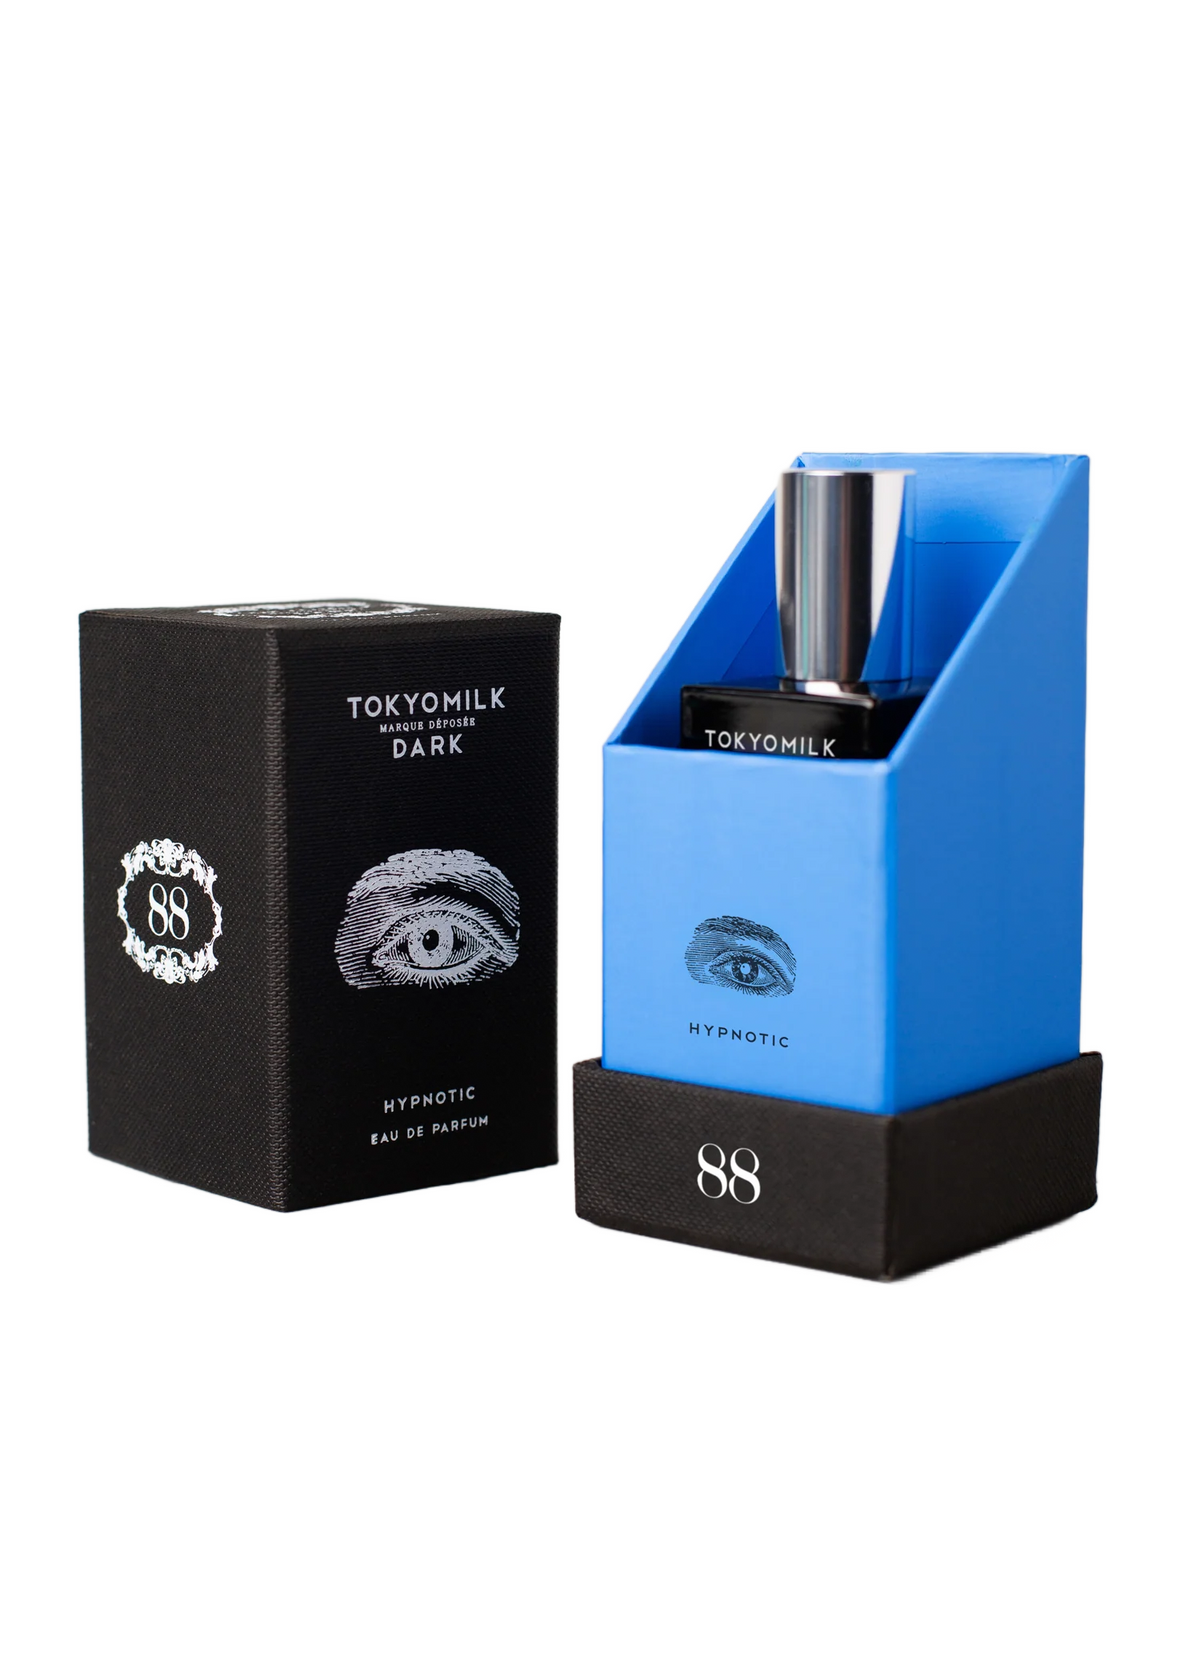 Two Margot Elena TokyoMilk Dark Hypnotic Eau De Parfum products: a black box labeled "hypnotic," featuring a stylized eye emblem, alongside an open blue box displaying a silver